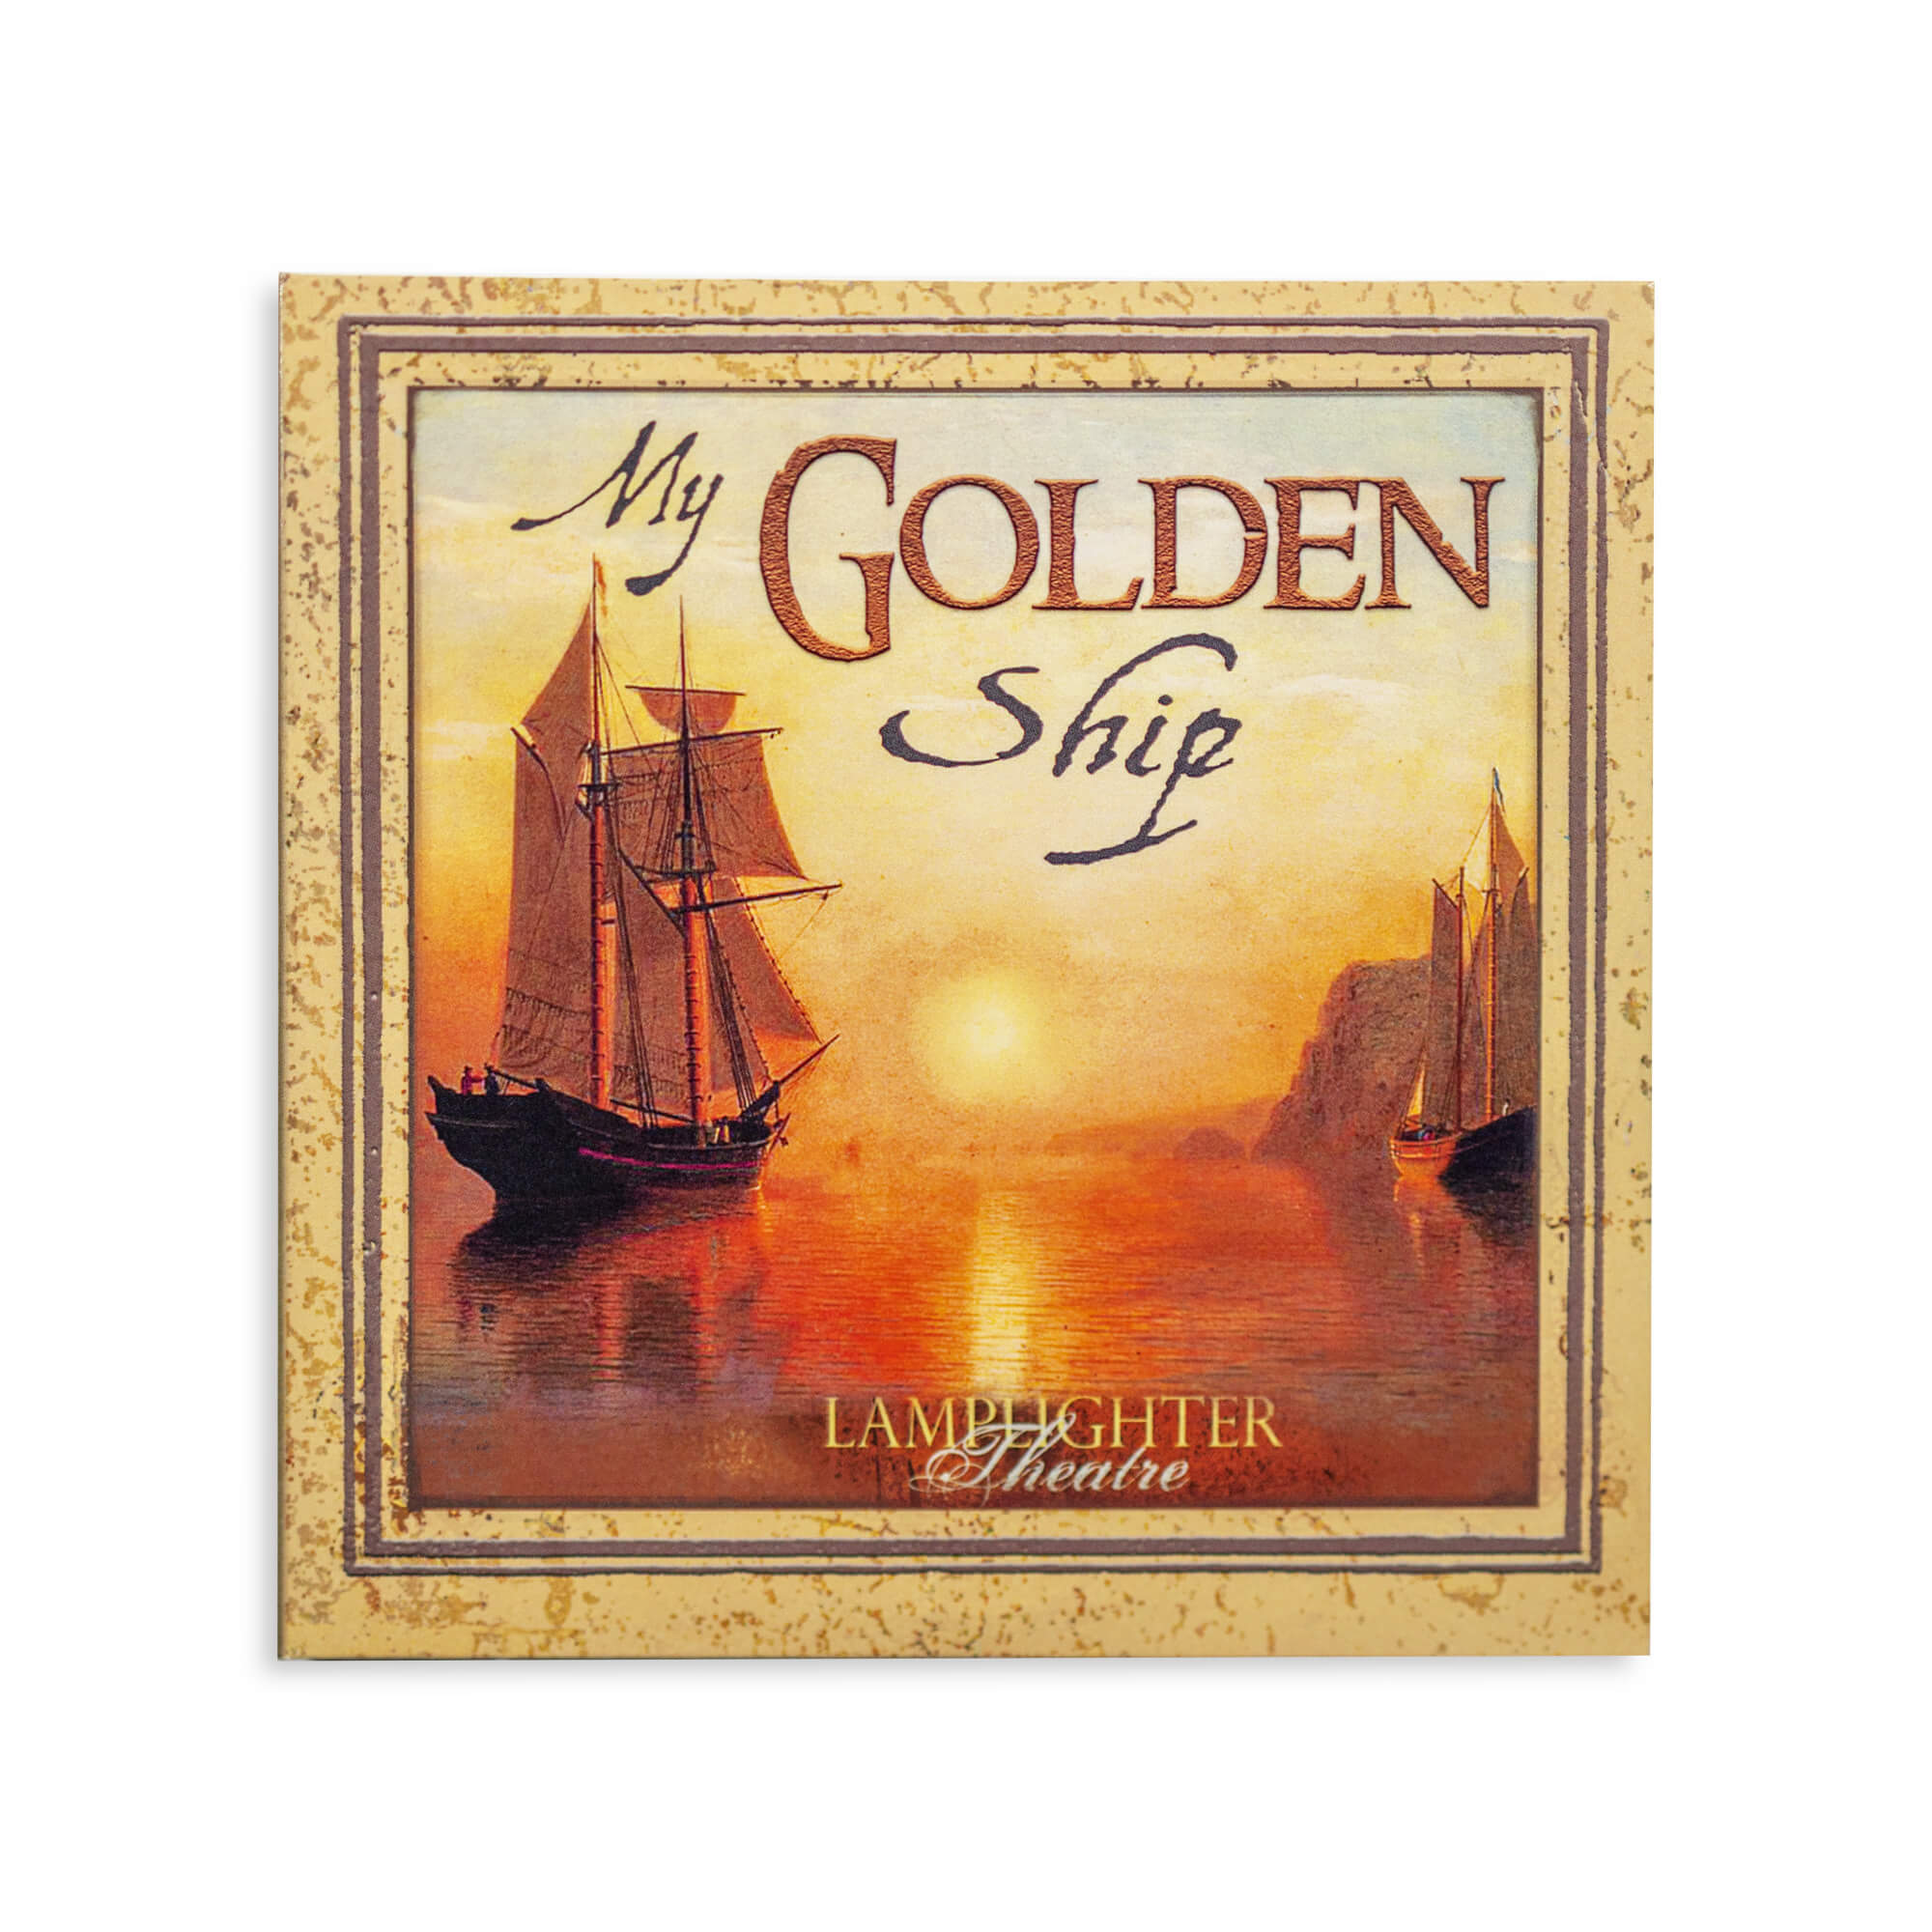 My Golden Ship Audio Drama CD